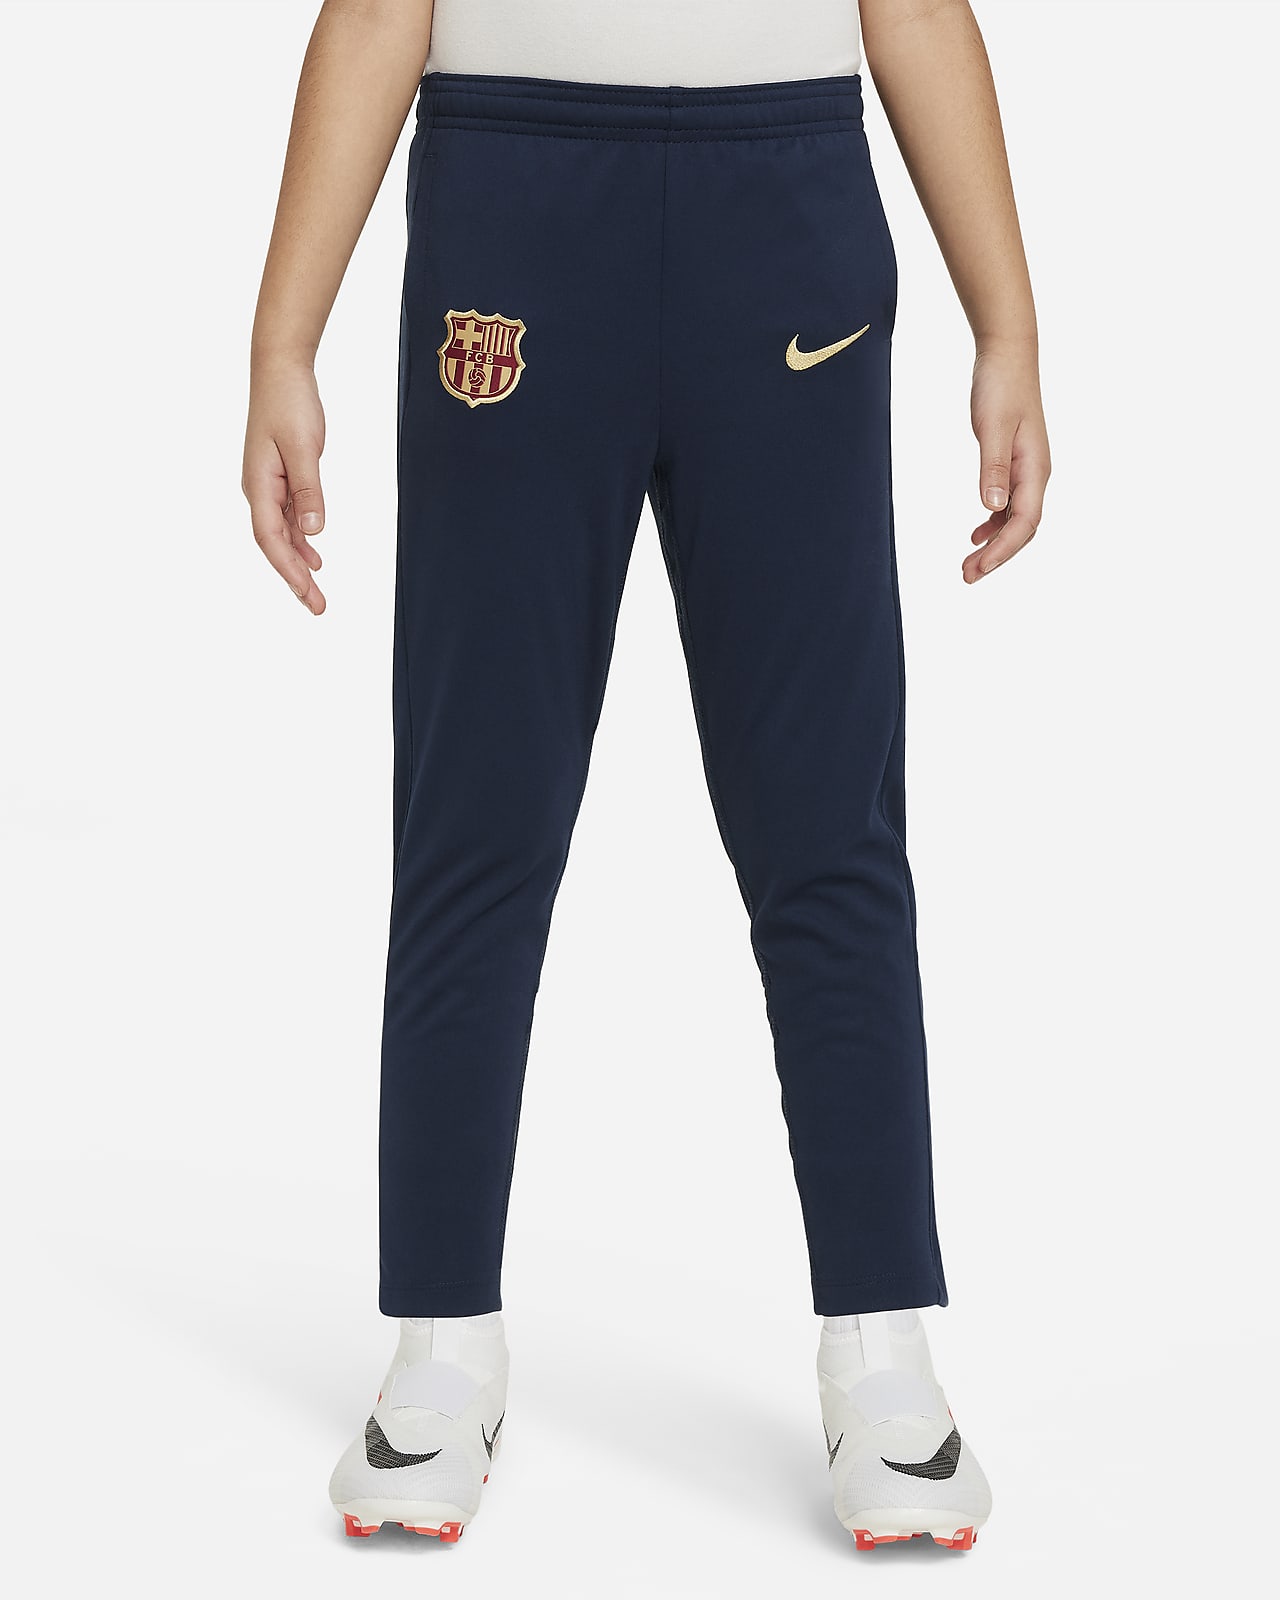 F.C. Barcelona Academy Pro Younger Kids' Nike Football Knit Pants